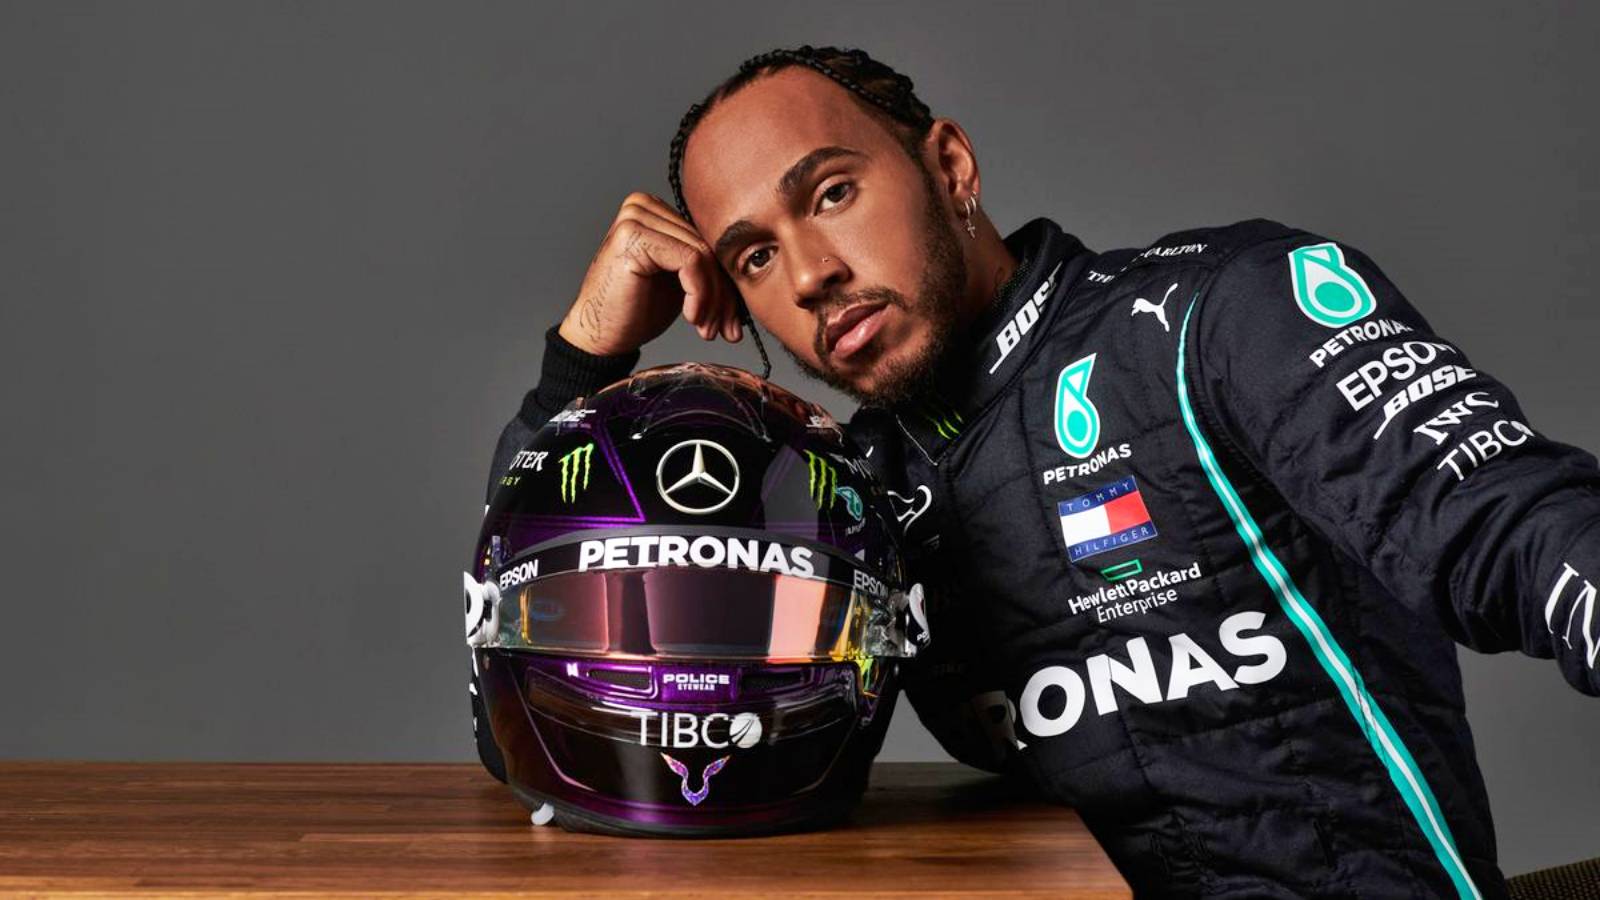 Formula 1 Lewis Hamilton Confirma RENUNTAT Curse Circuite